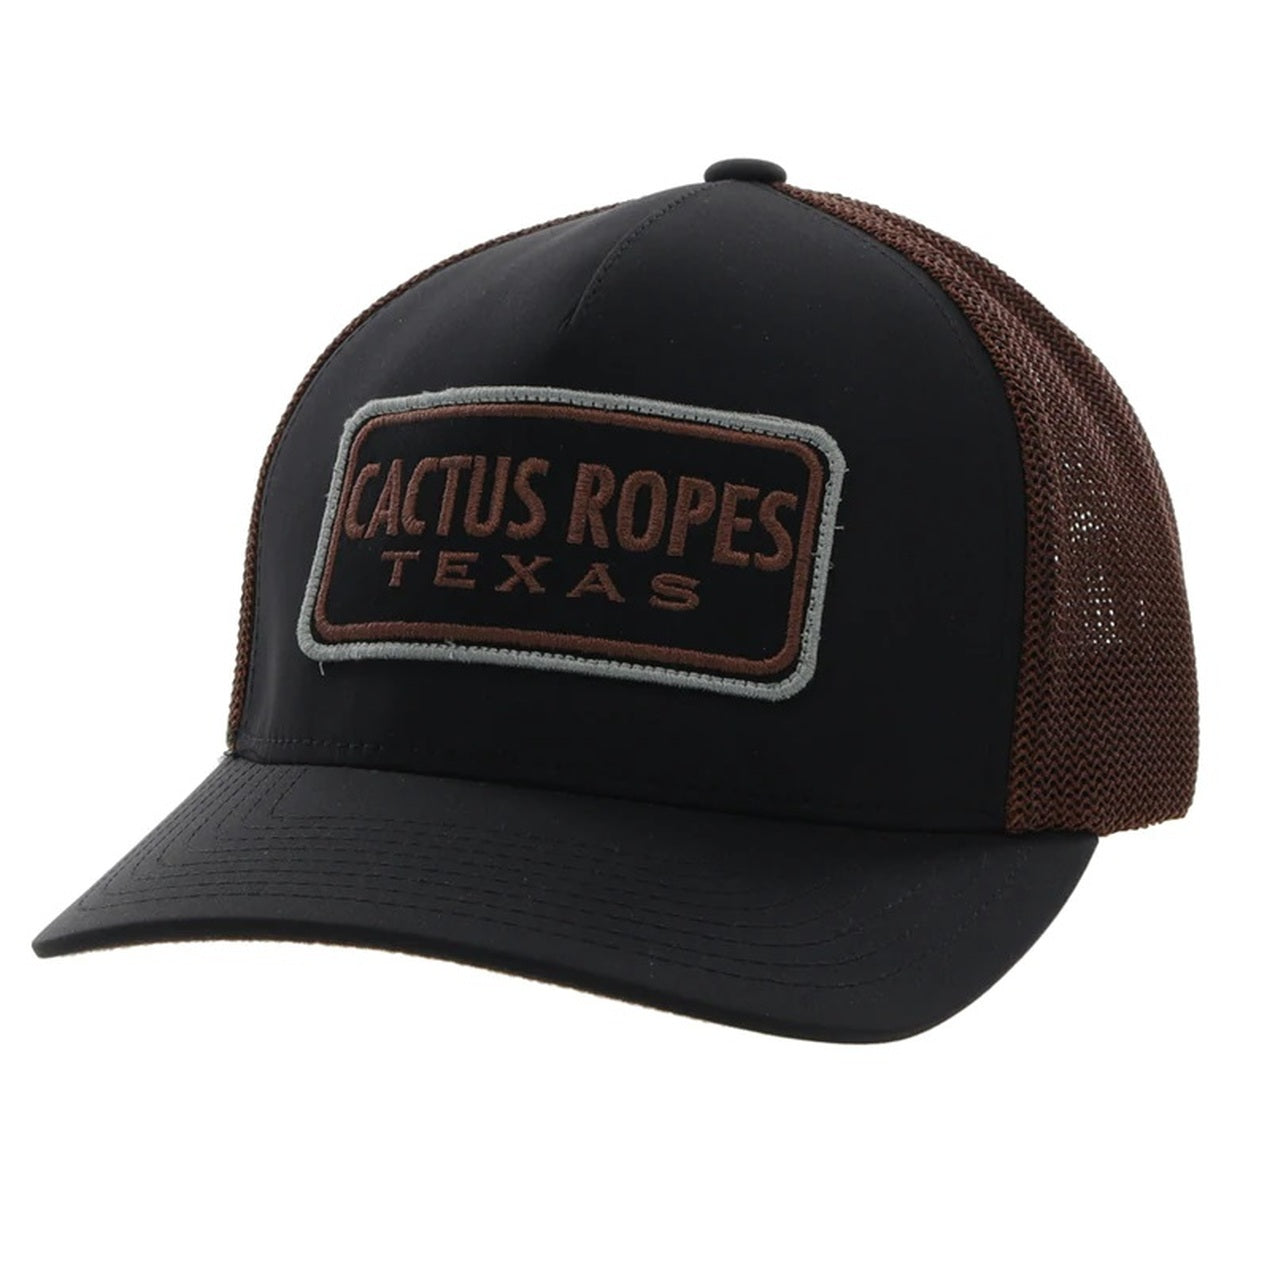 Hooey Cactus Ropes Black & Brown Ball Cap